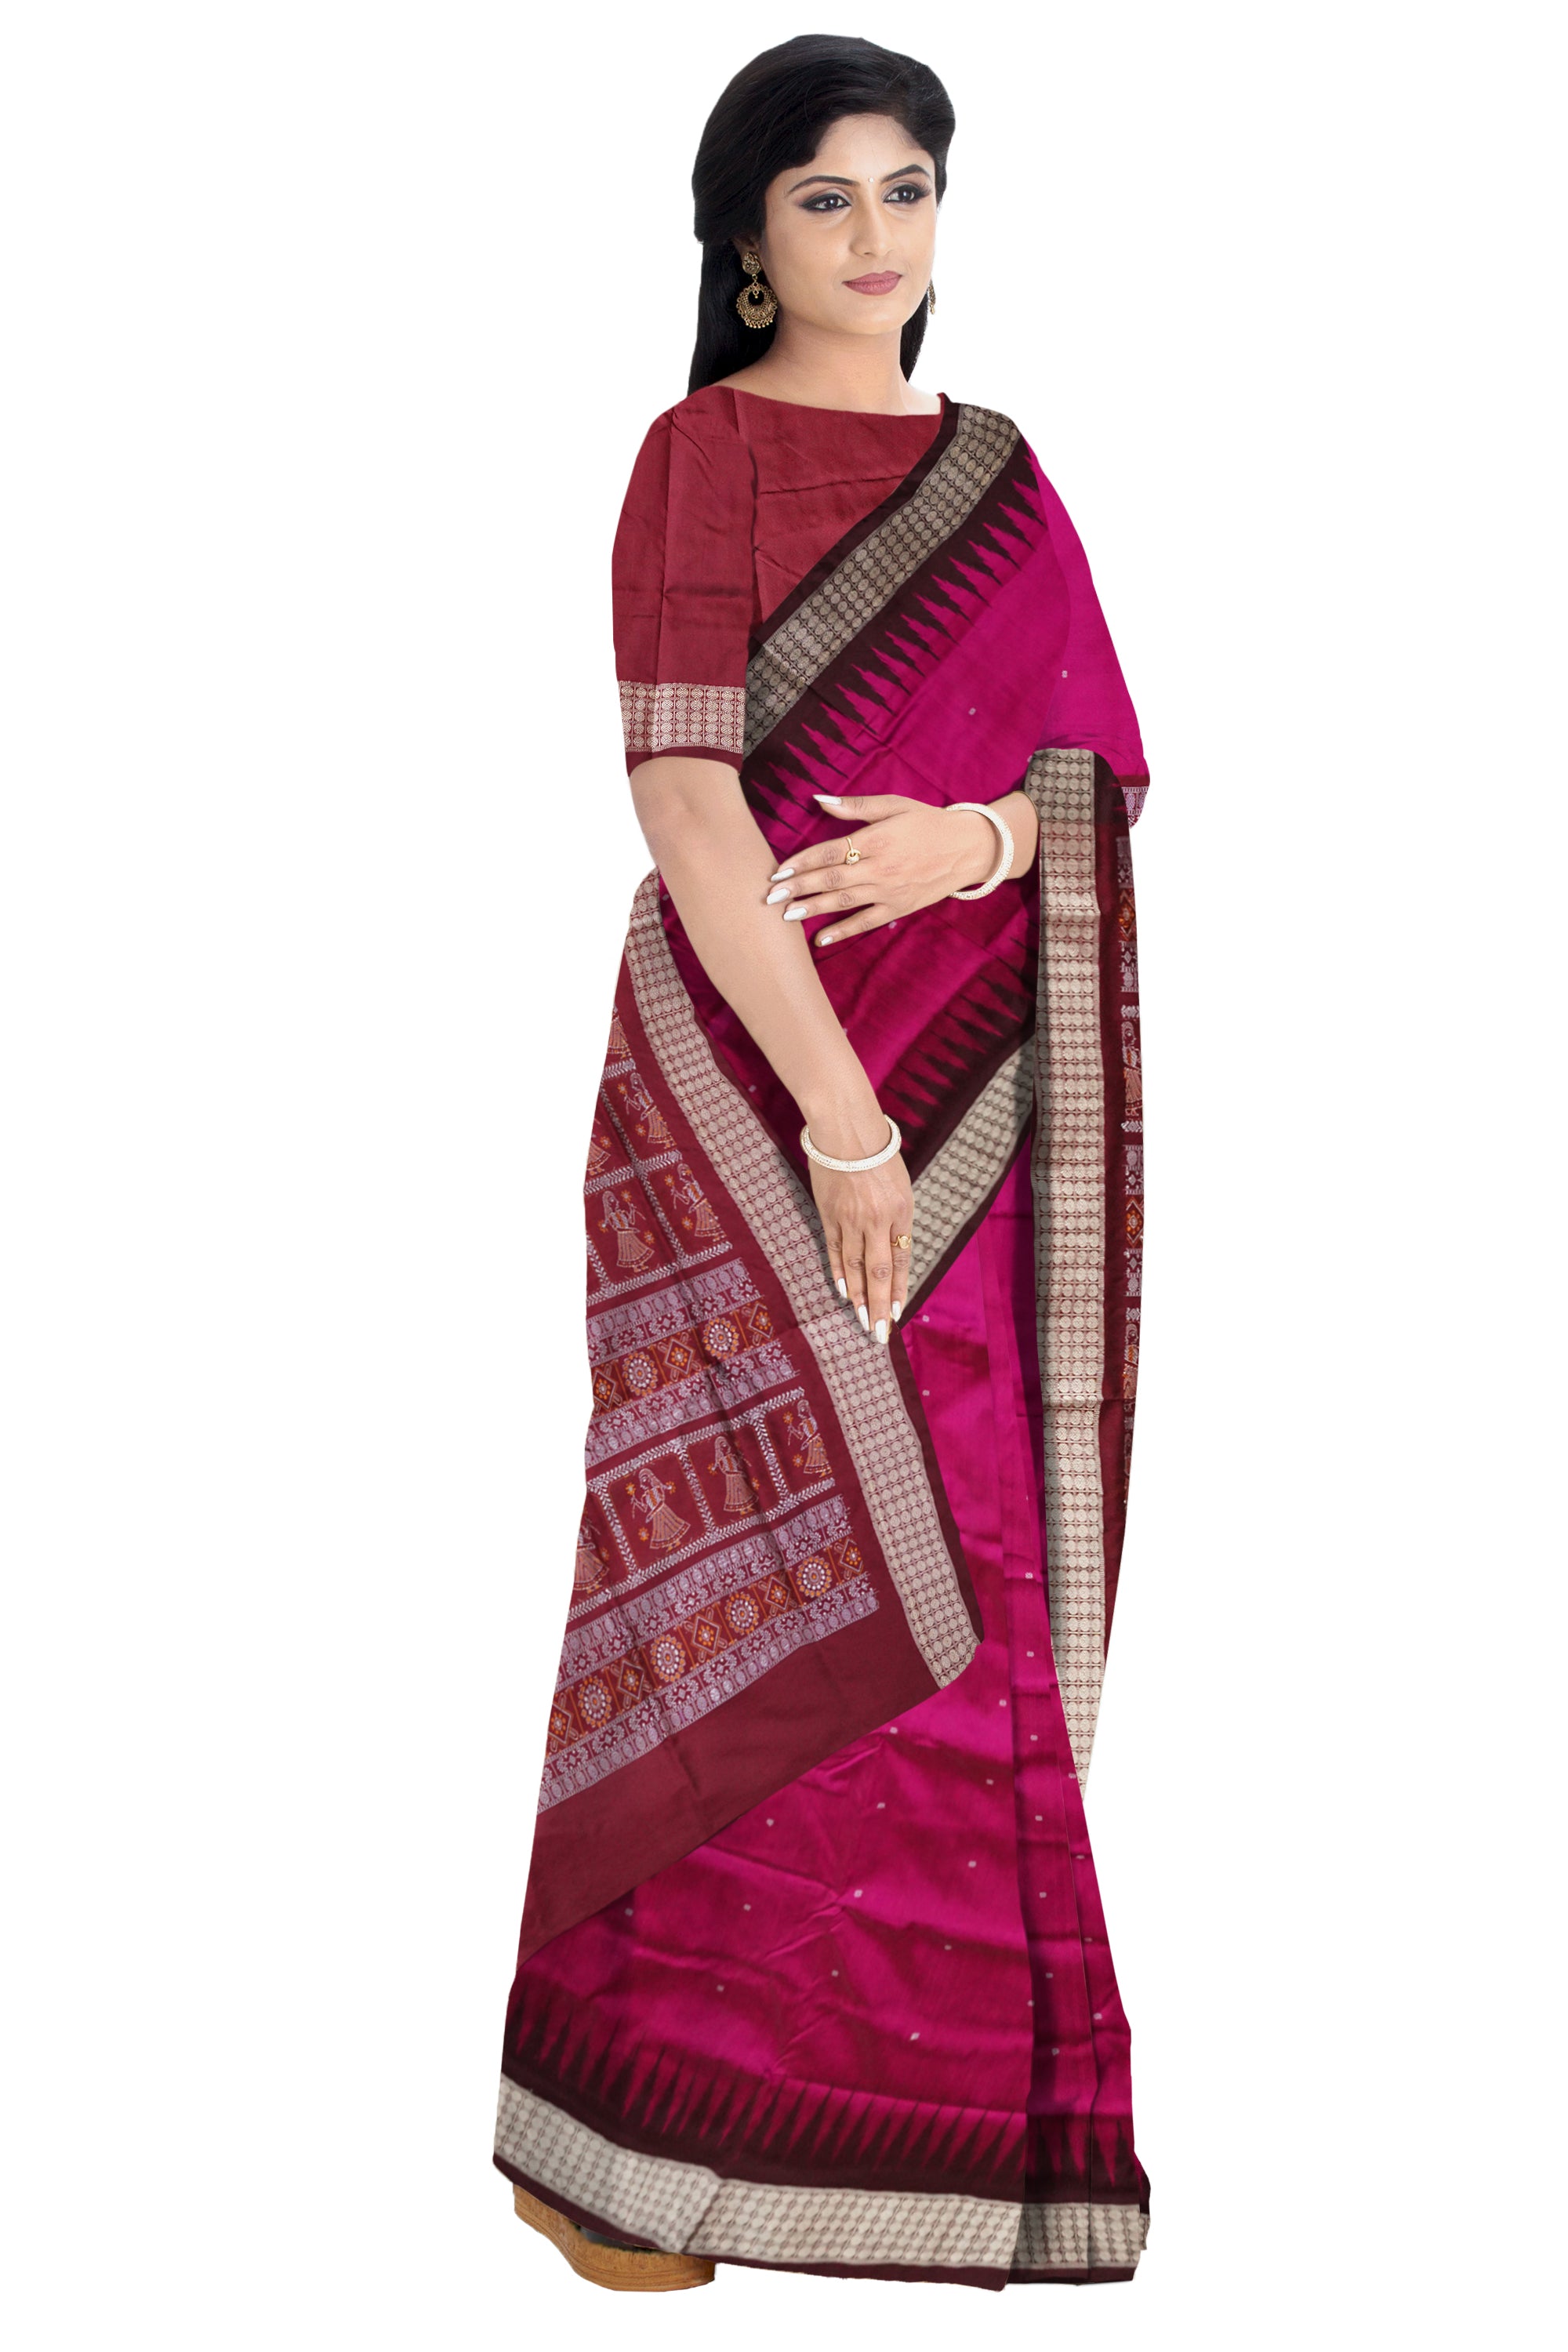 Pink and maroon pata saree, doll pattern pallu, matching blouse included. - Koshali Arts & Crafts Enterprise